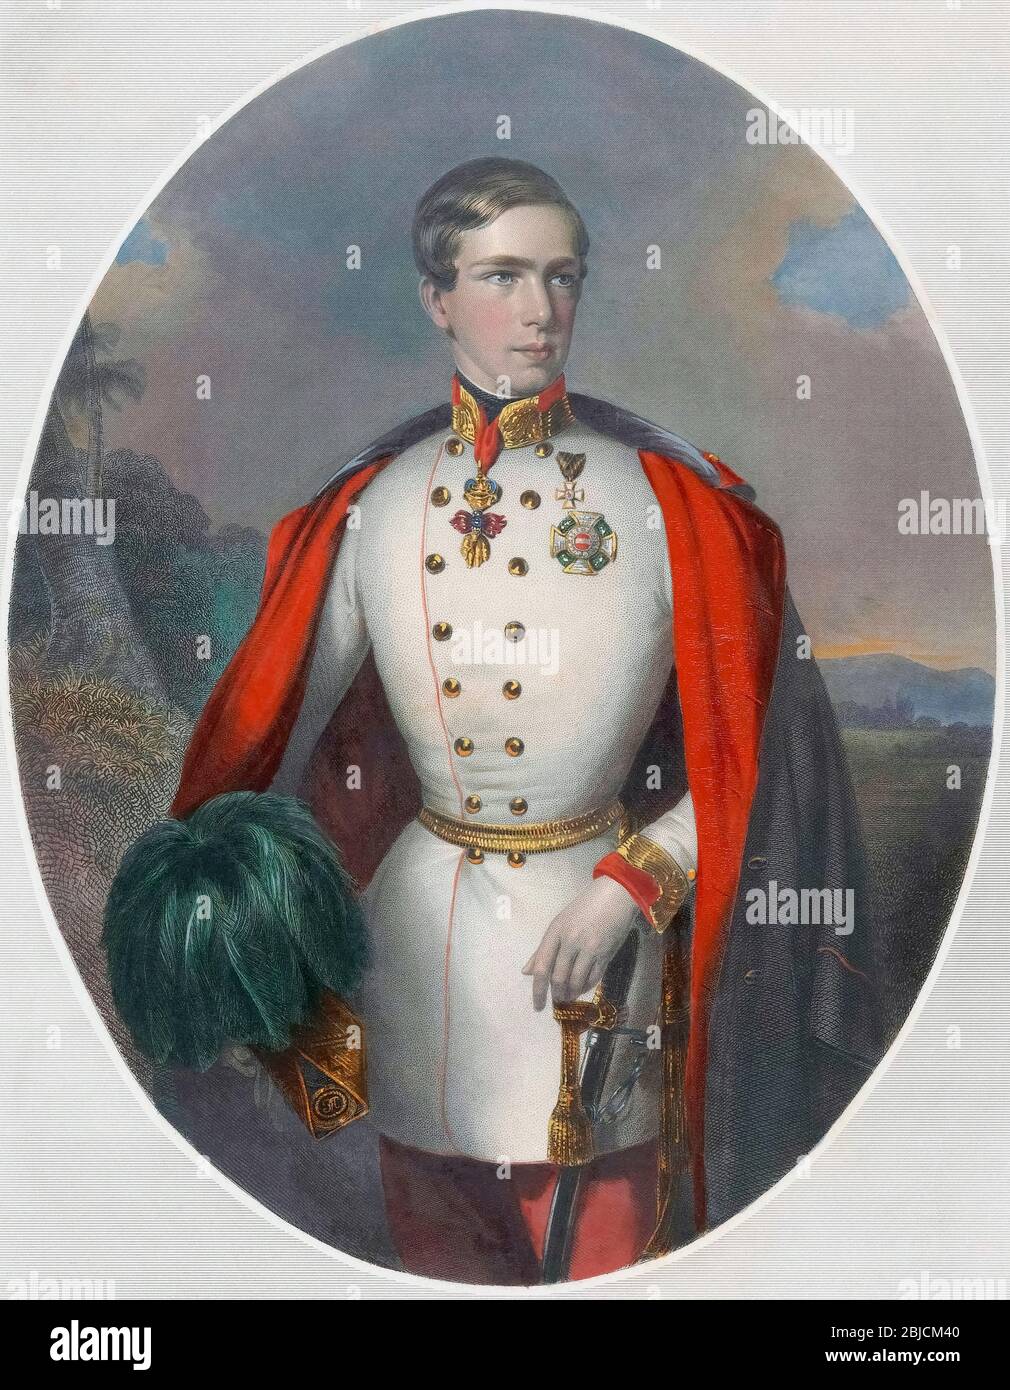 Francesco Giuseppe i, alias Francesco Giuseppe i, 1830 – 1916. Imperatore d'Austria e re d'Ungheria, re di Boemia. Dopo un'incisione di Karl Mahlknecht. Foto Stock